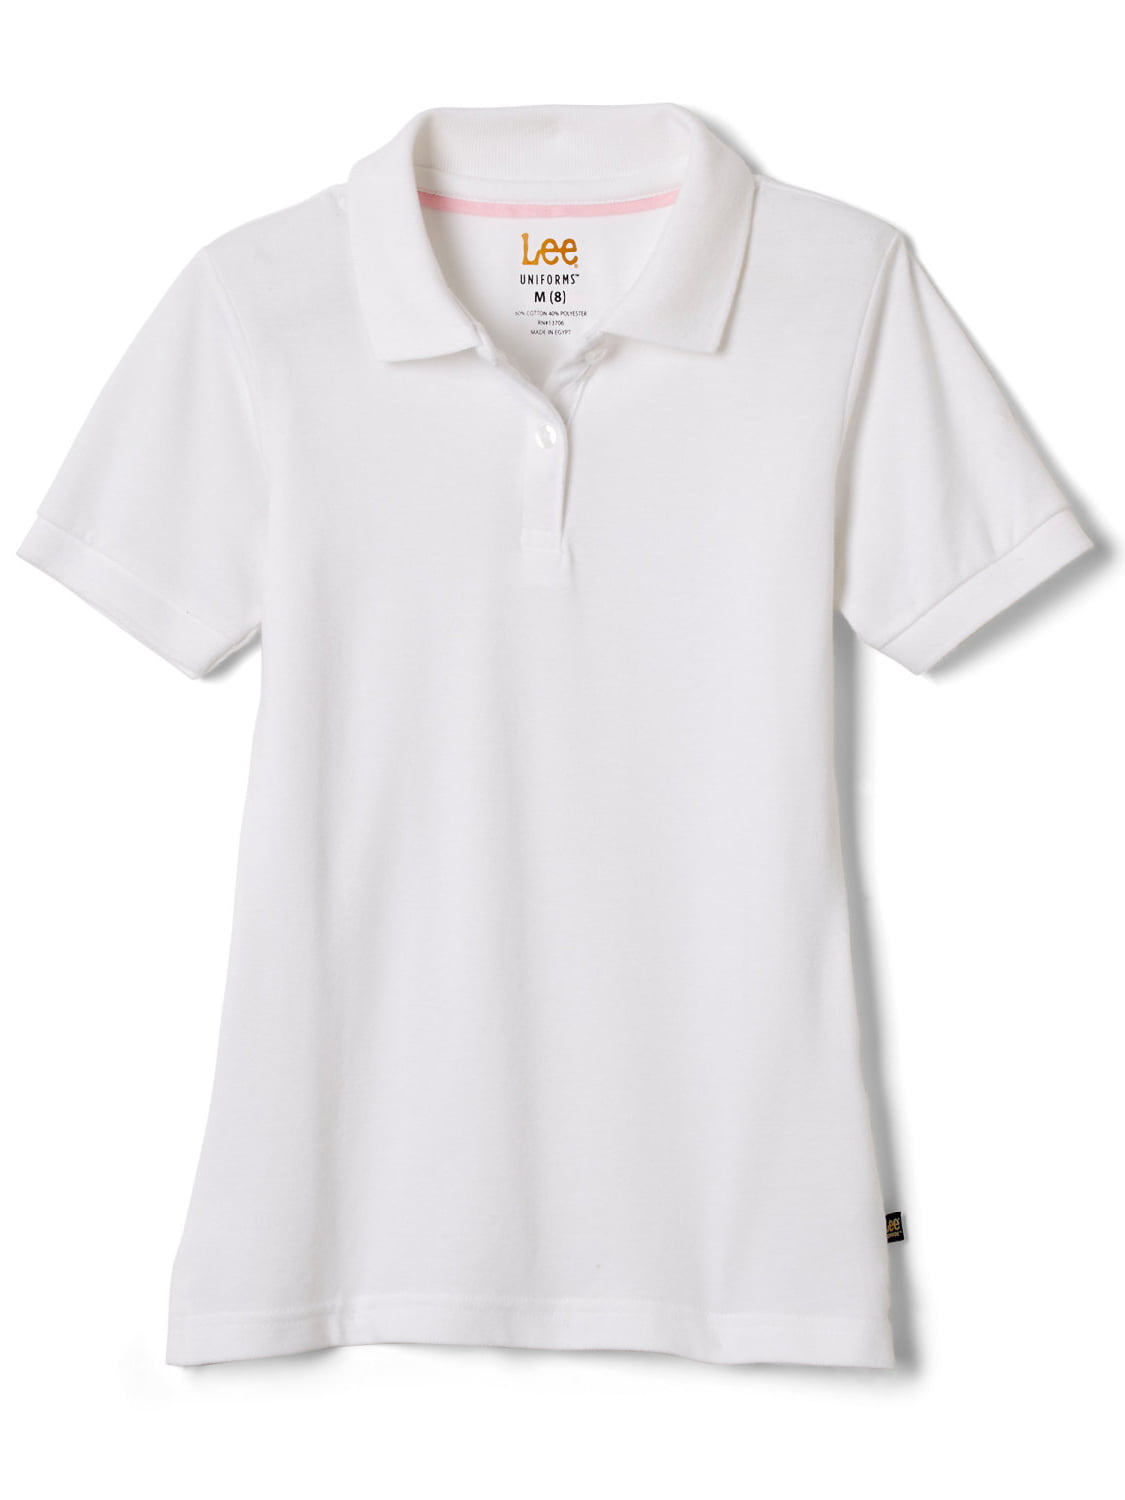 Lee Uniforms Girls School Uniform Short Sleeve Stretch Pique Polo ...